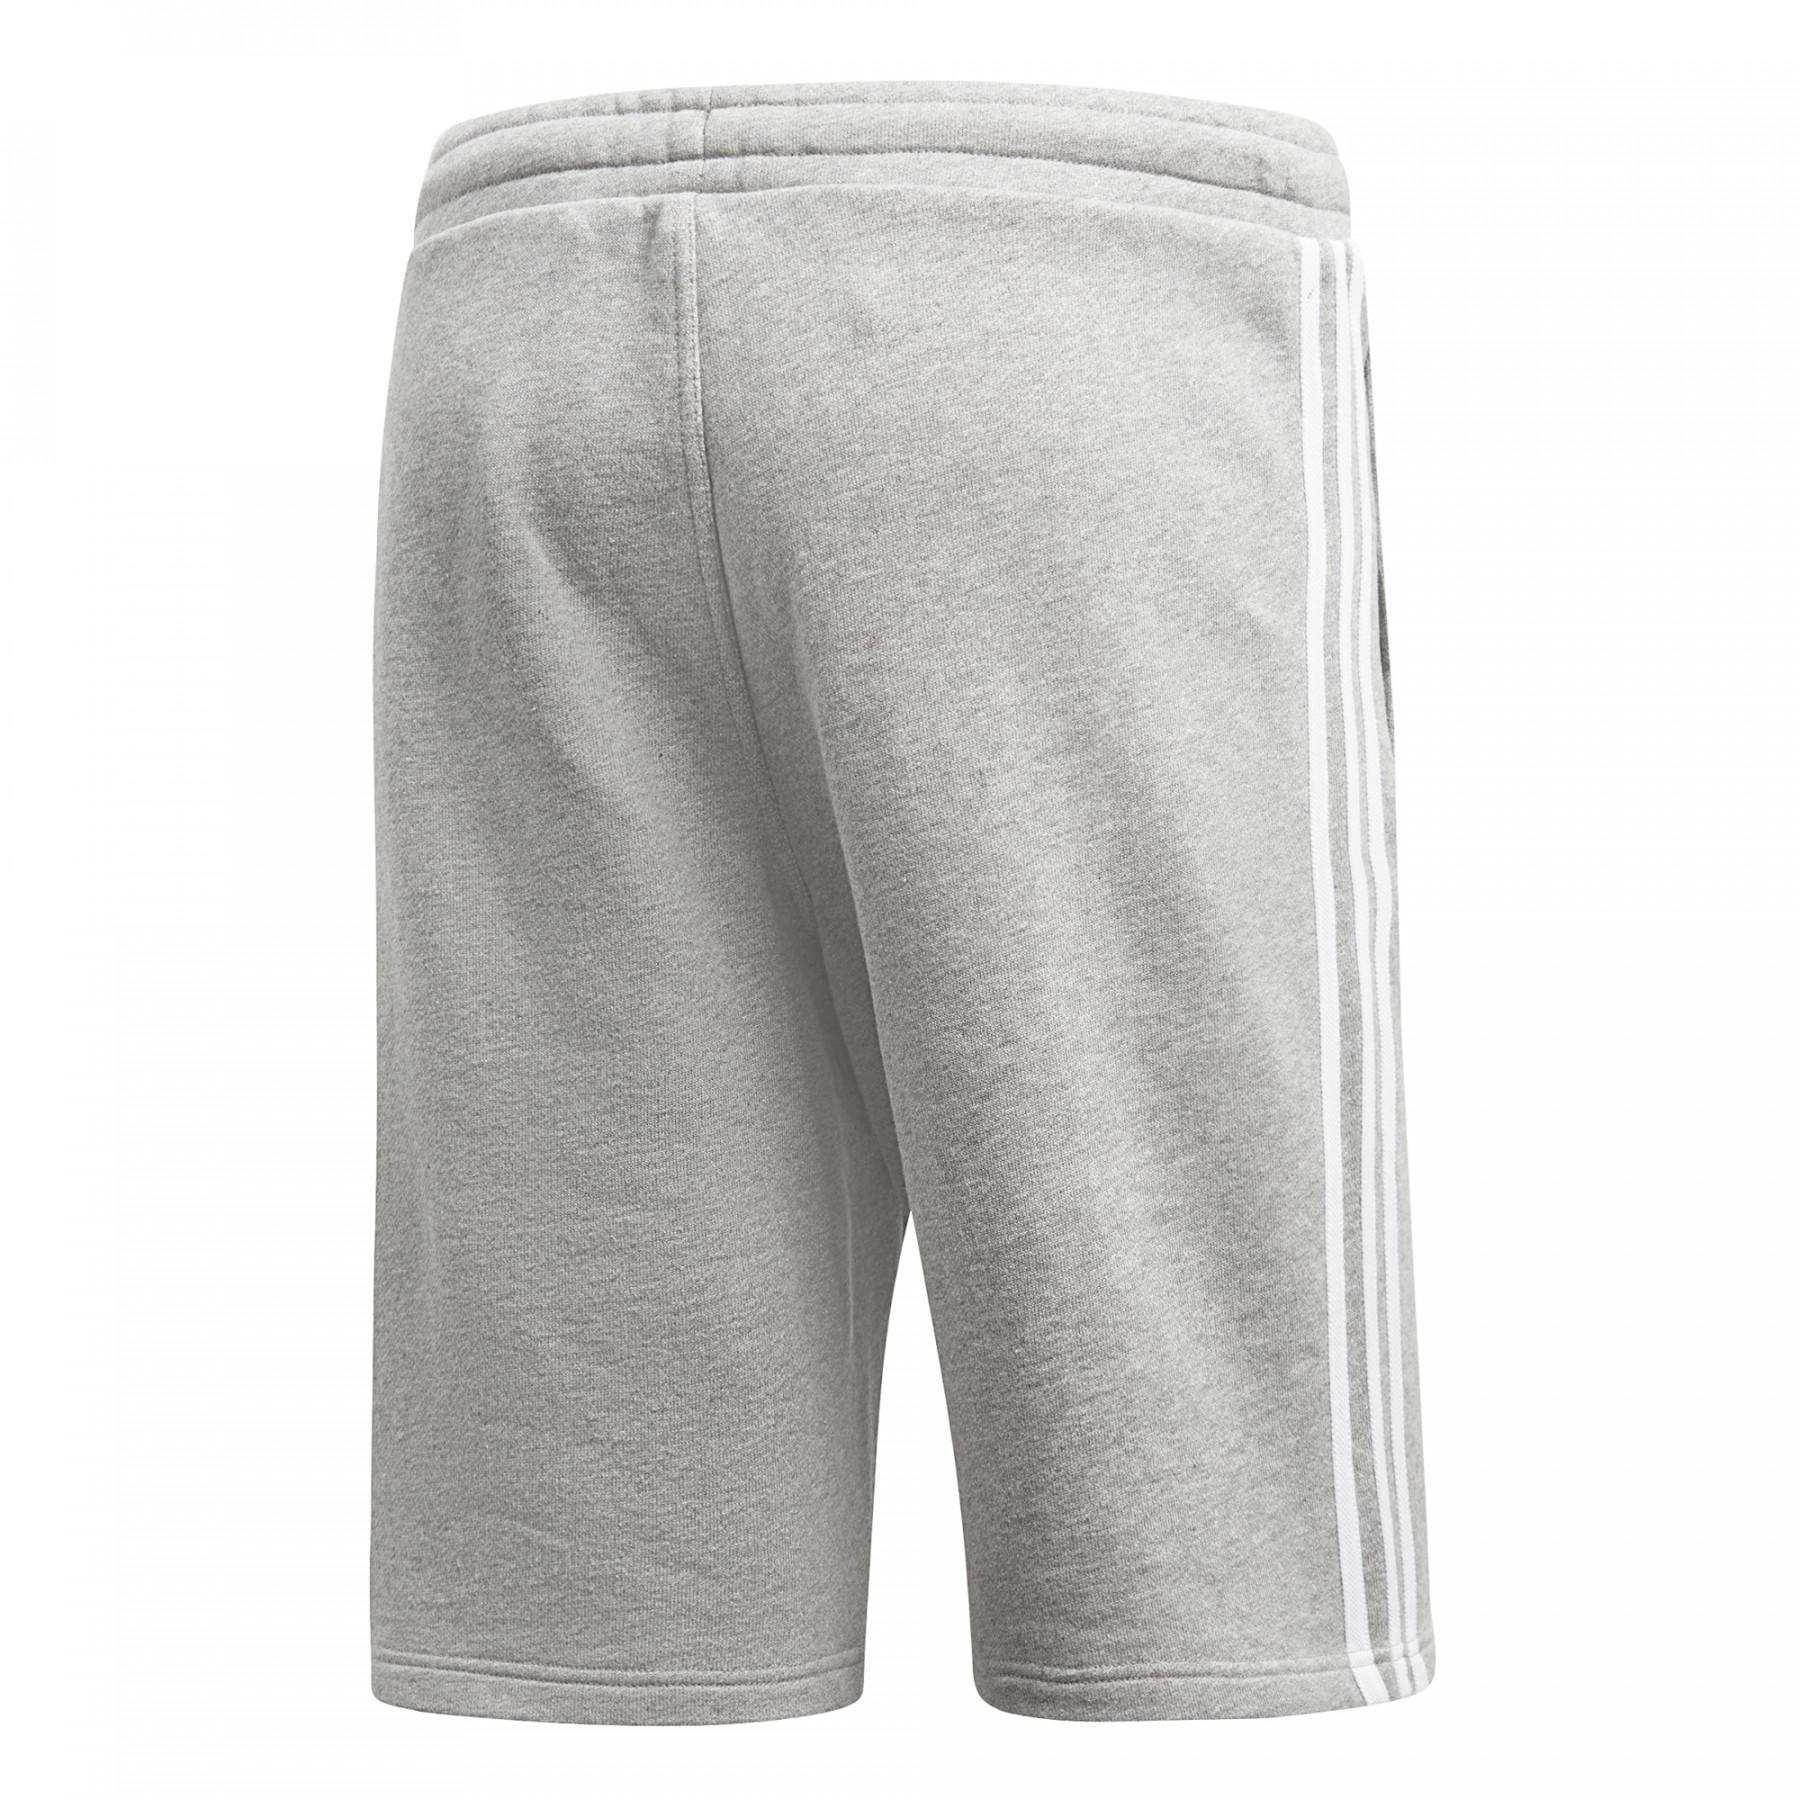 Pantaloncini adidas 3-Stripes grigio